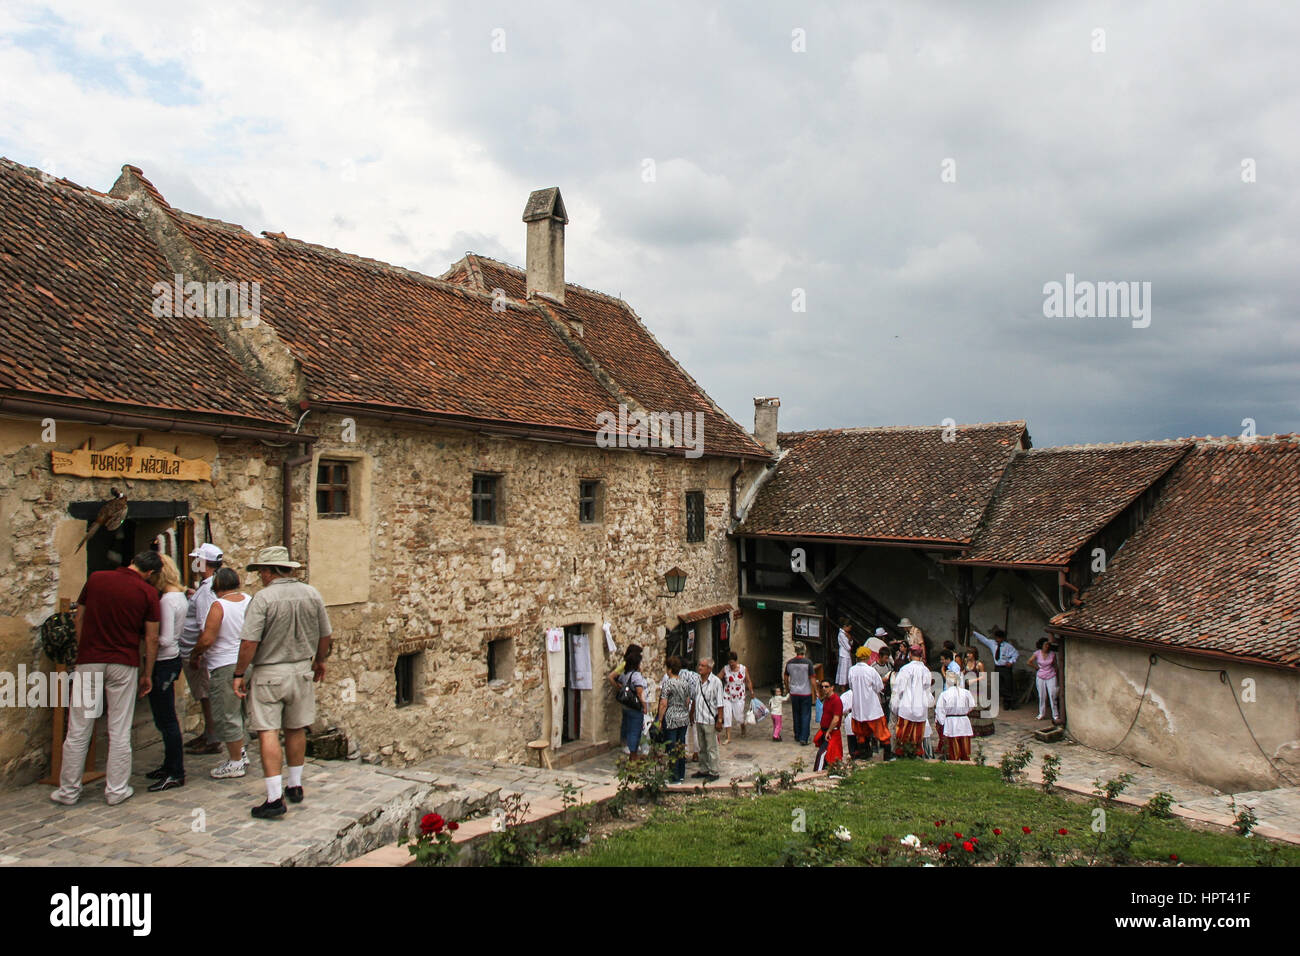 Rasnov, Rumania, Julio 4, 2009: Los turistas que visitan la fortaleza medieval Rasnov, condado de Brasov, Rumania. Foto de stock